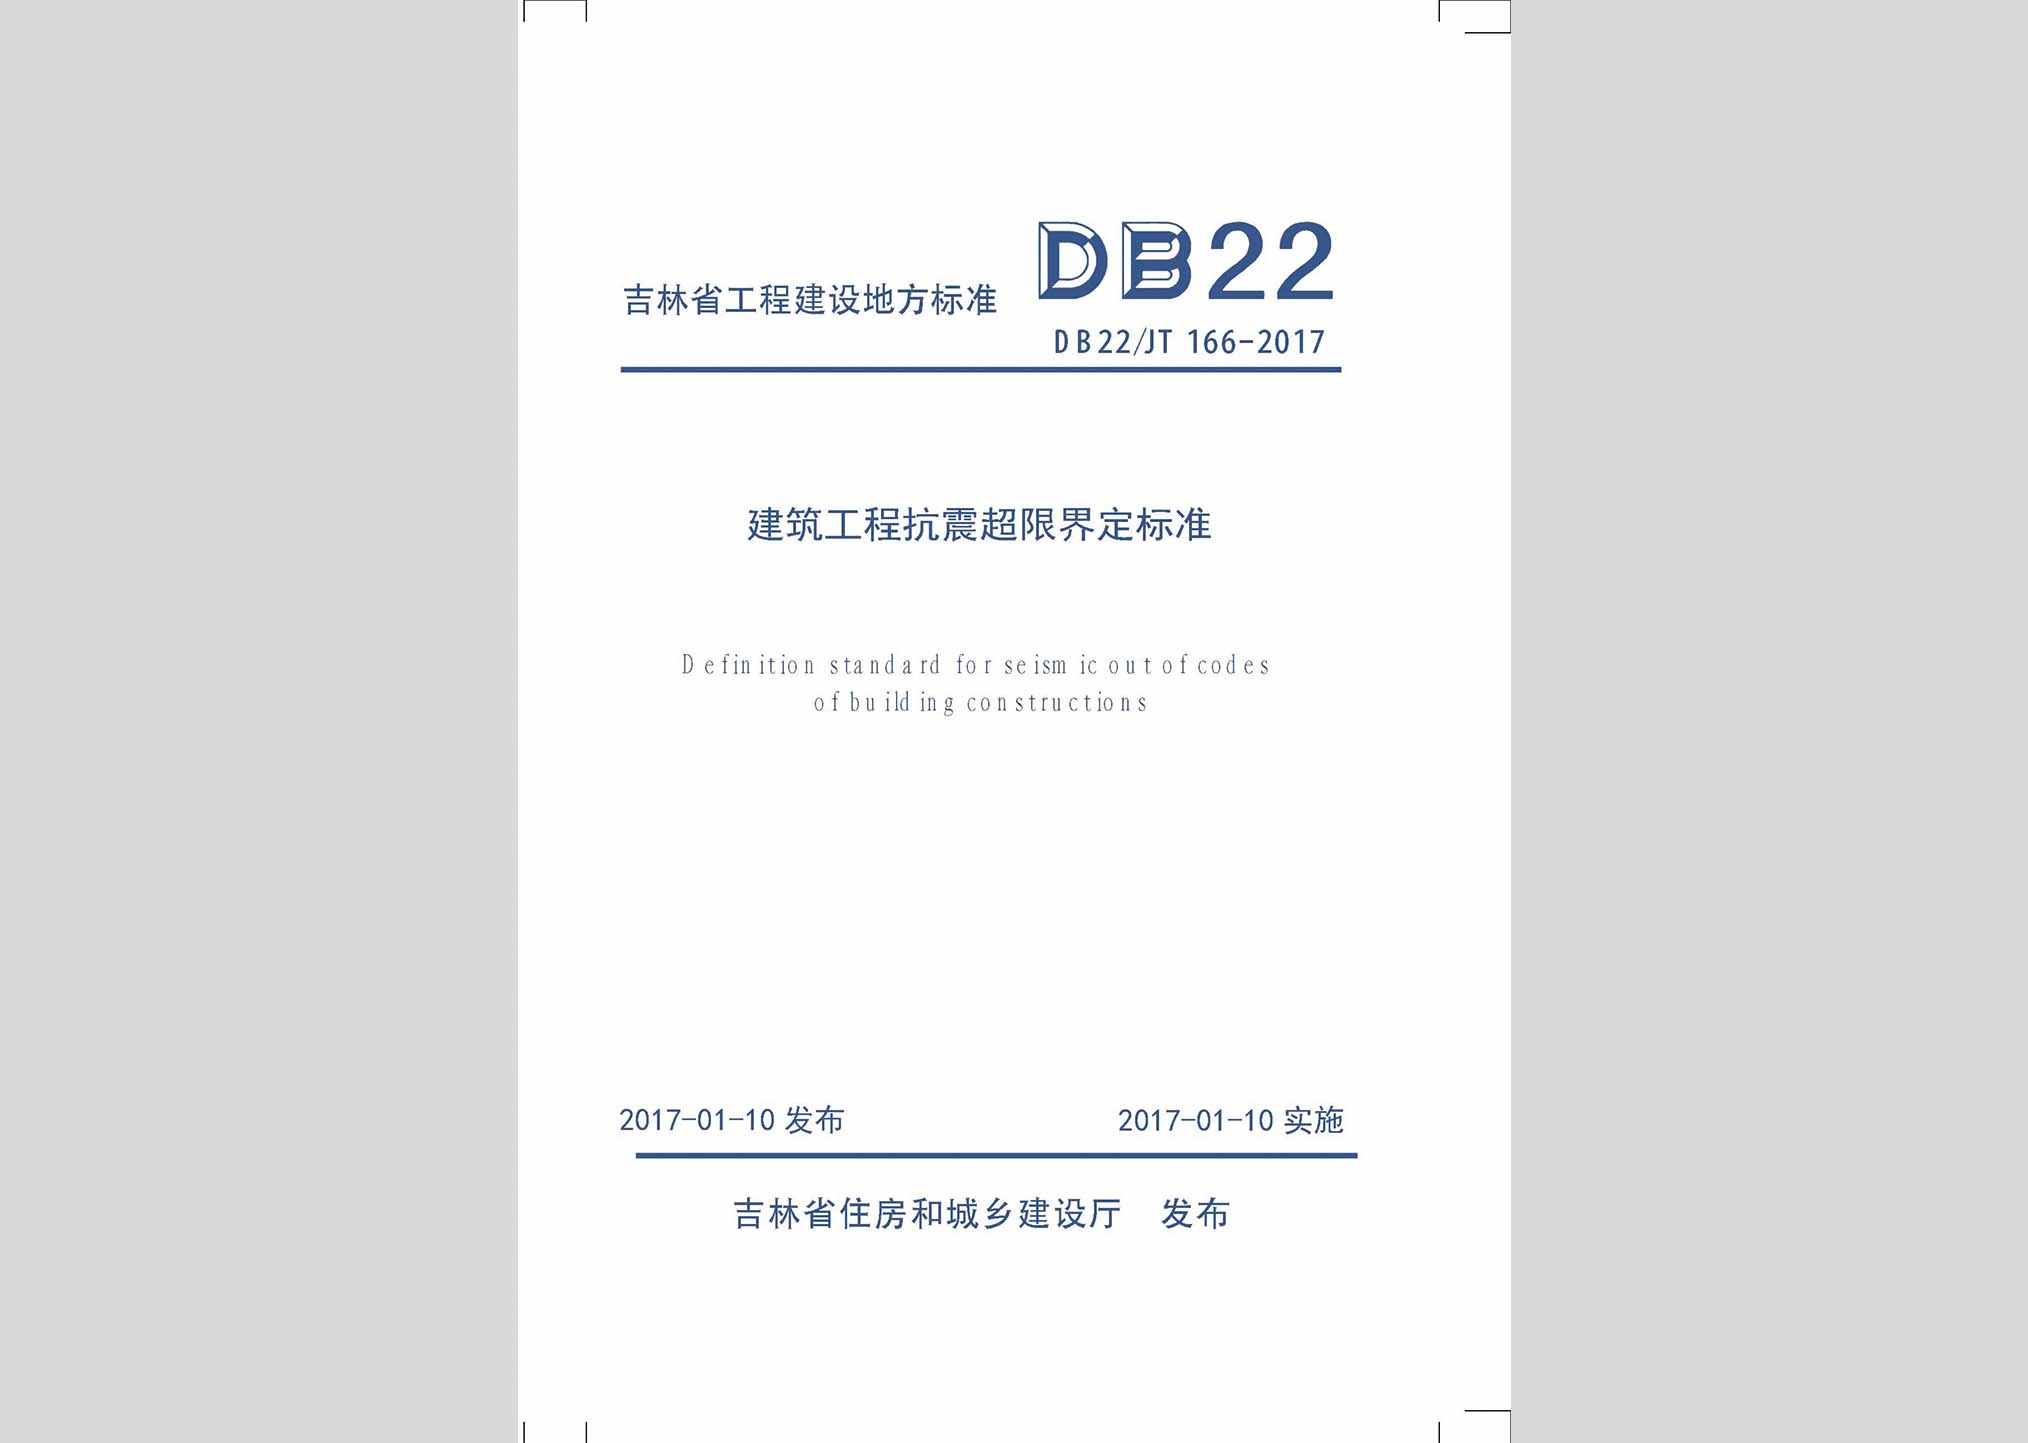 DB22/JT166-2017：建筑工程抗震超限界定标准